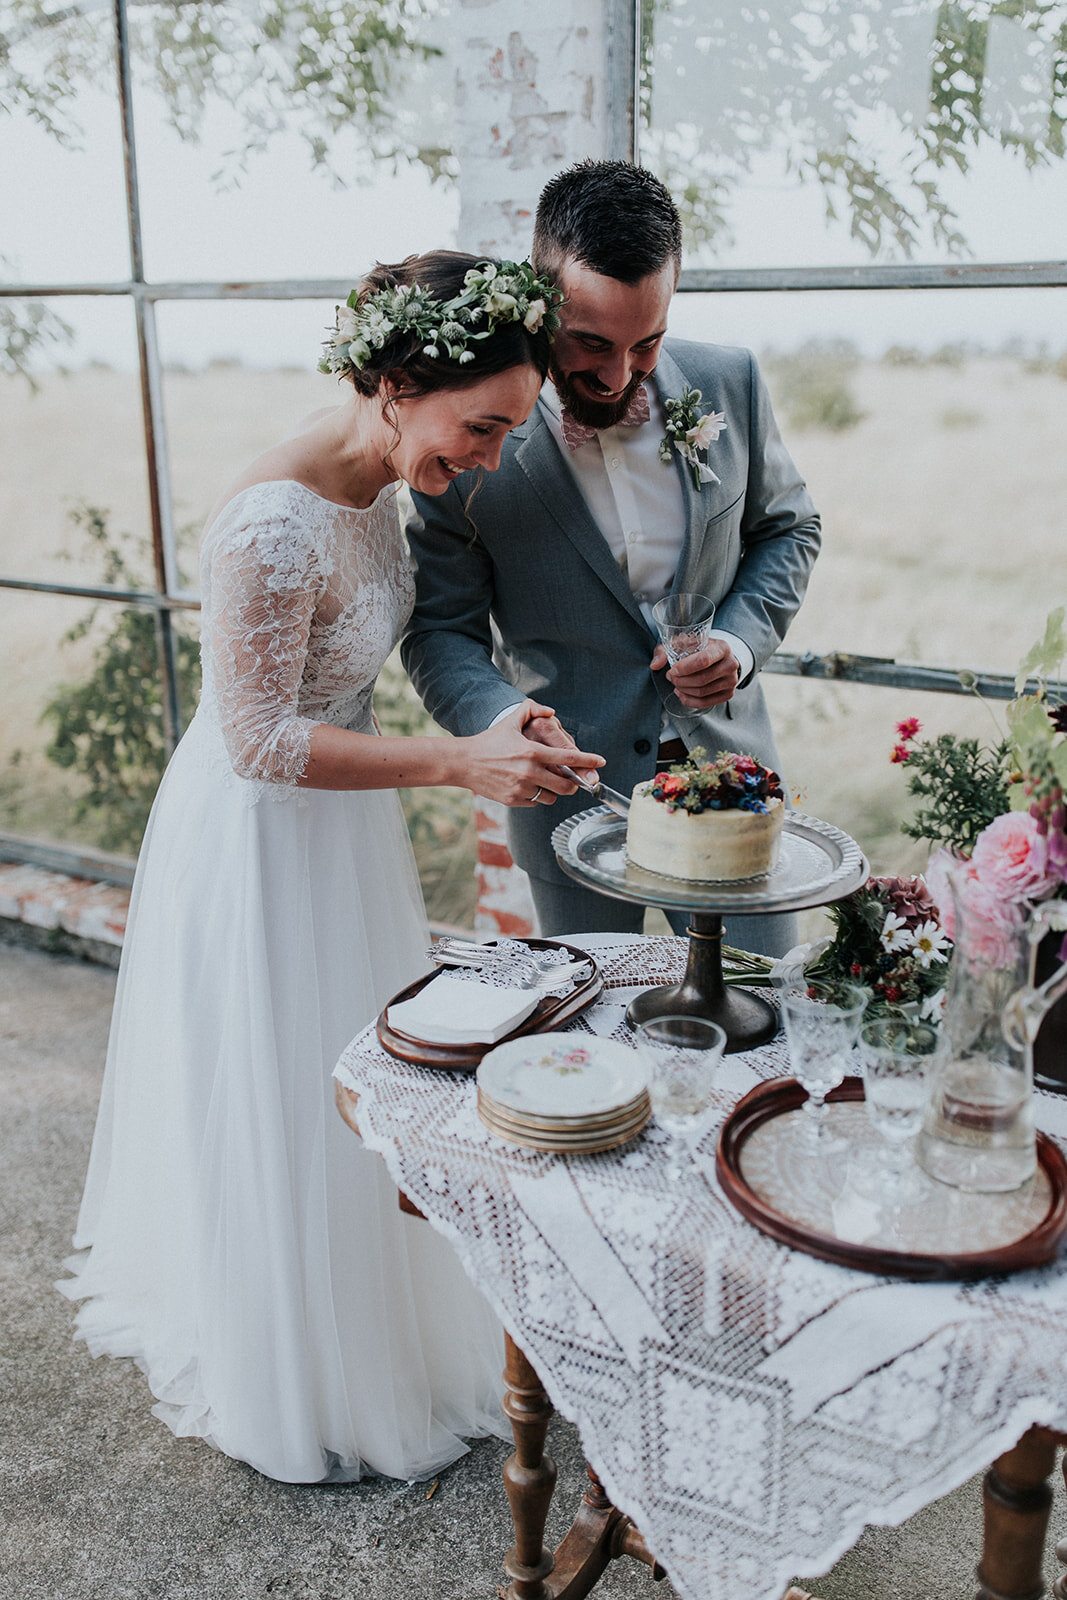 bride and groom at intimate rustic wedding ceremony - aero island, denmark - full service wedding planners - danish island weddings